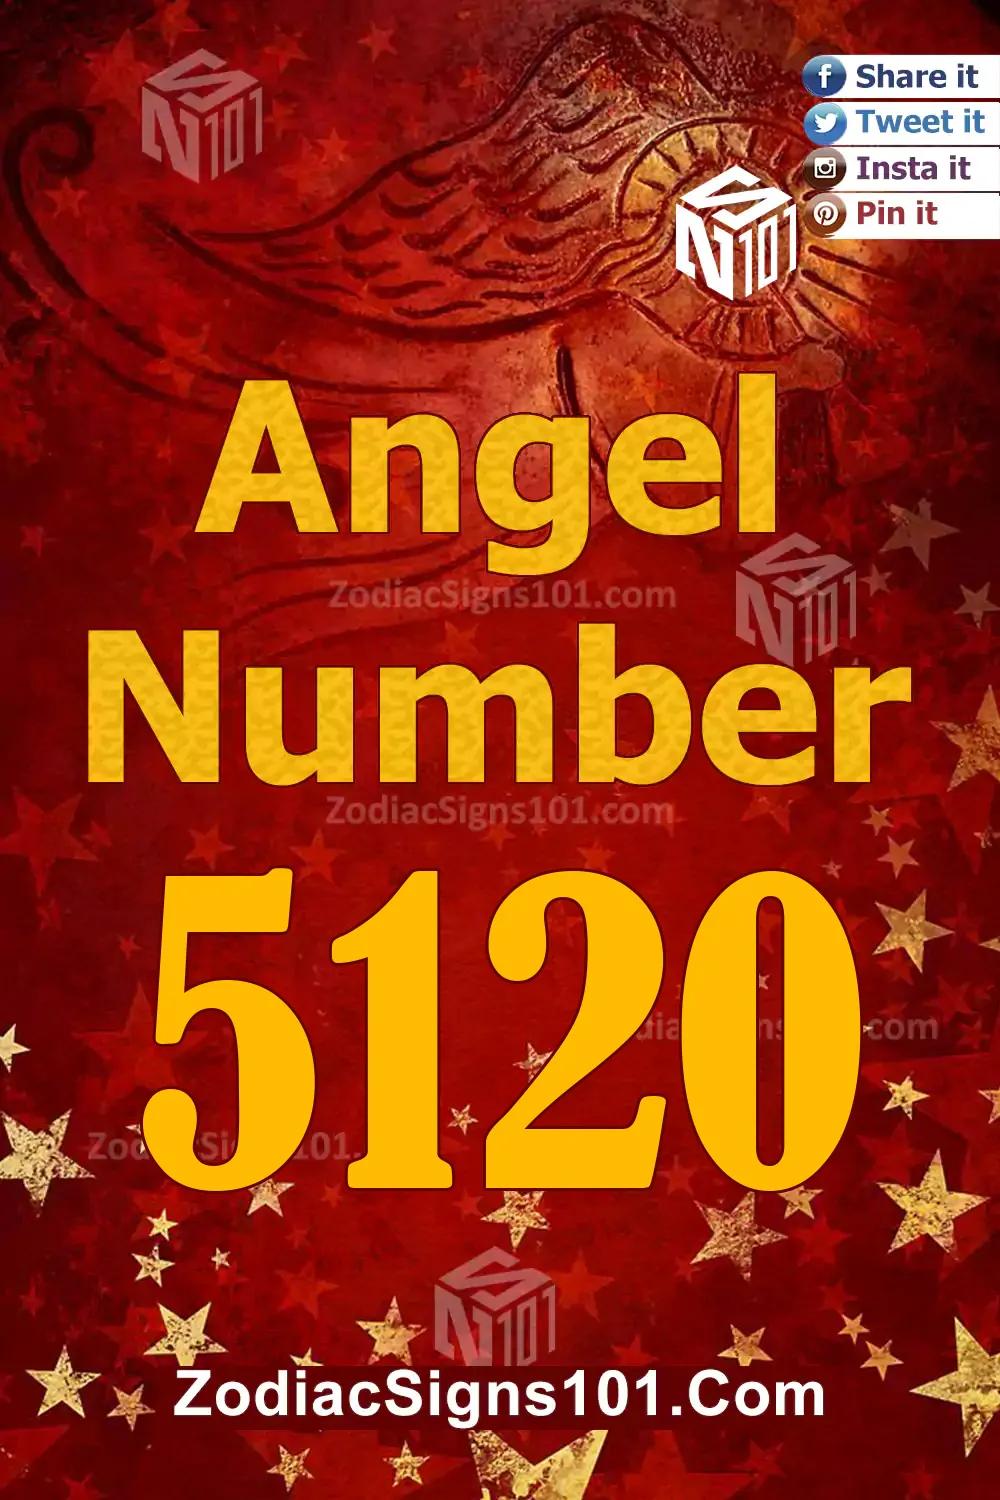 5120-Angel-Number-Meaning.jpg